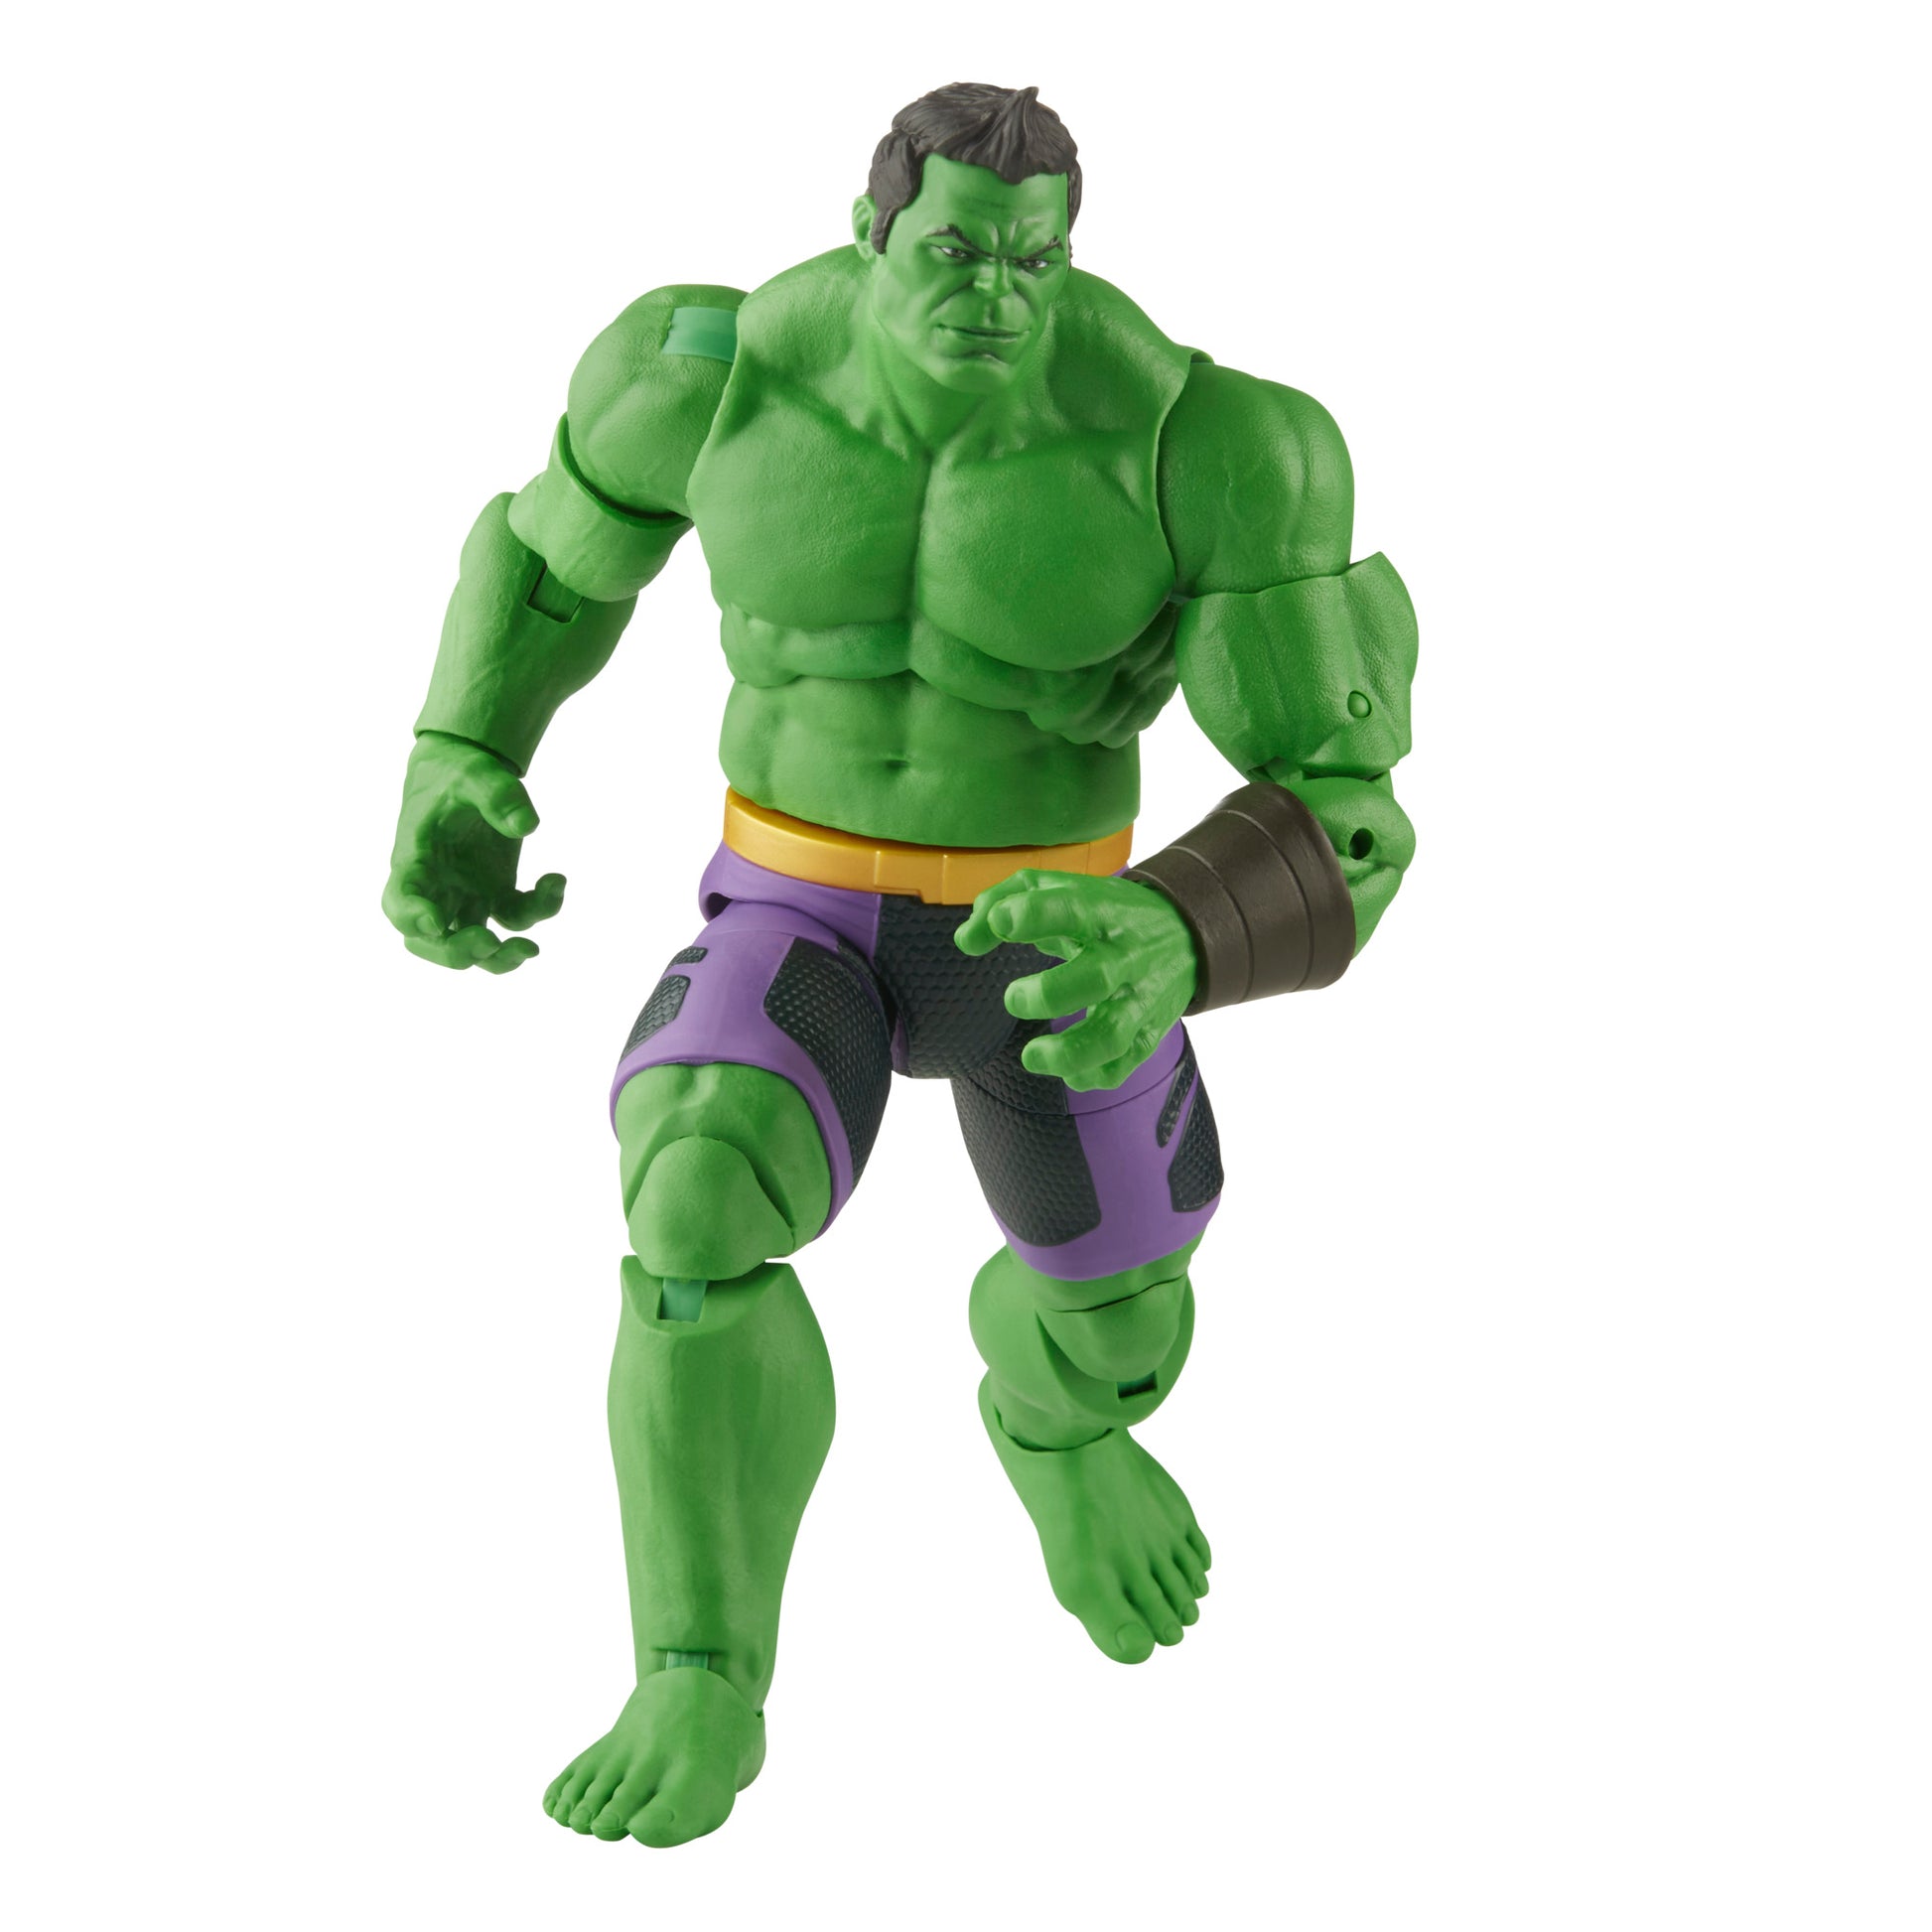 Build-A-Figure Hulk - Heretoserveyou